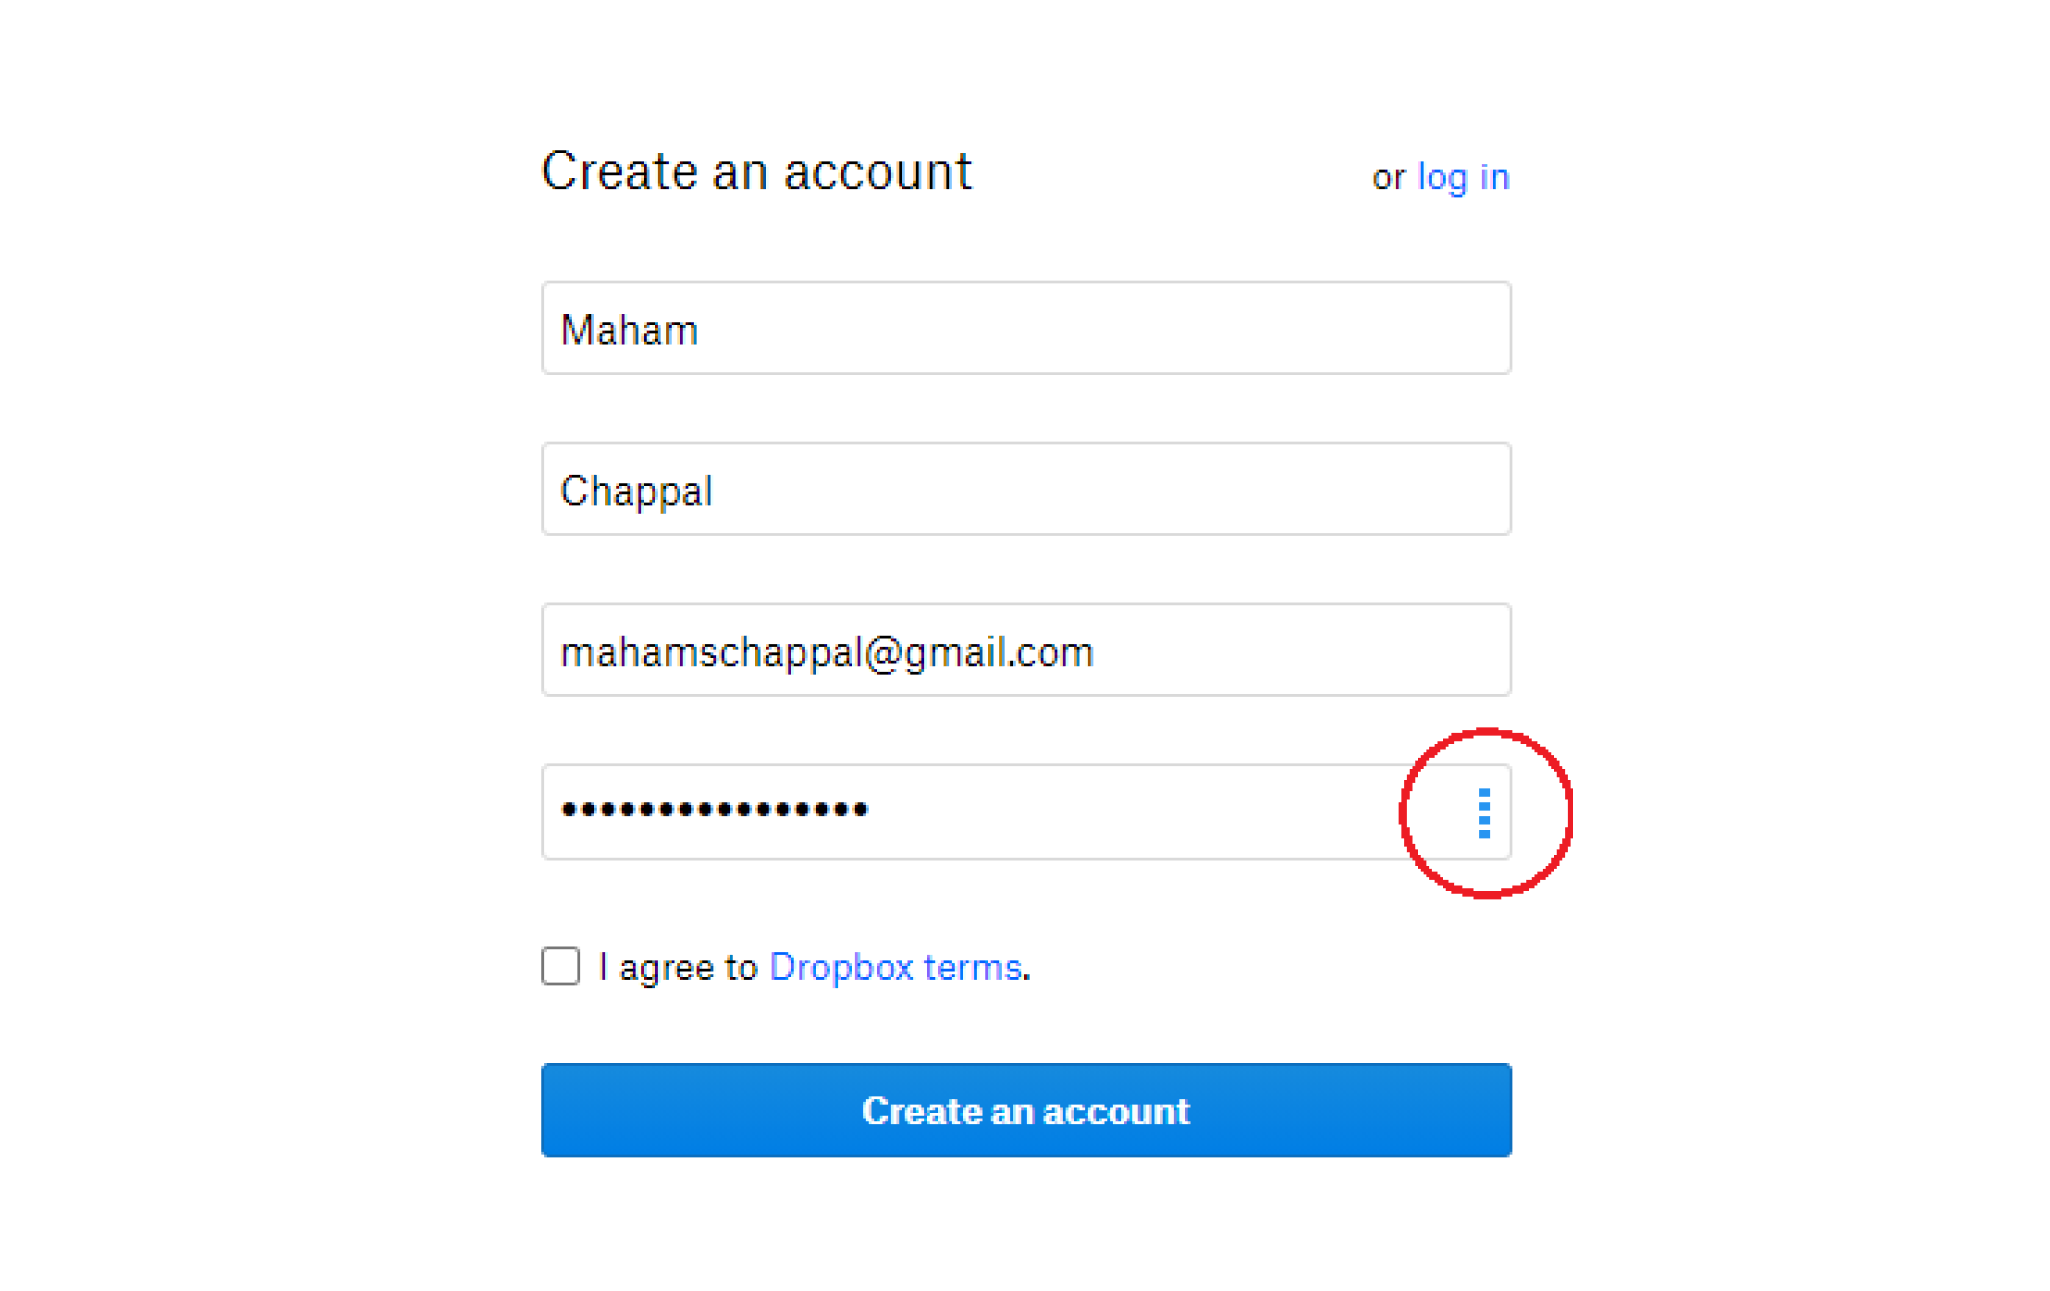 Creating an account on Dropbox